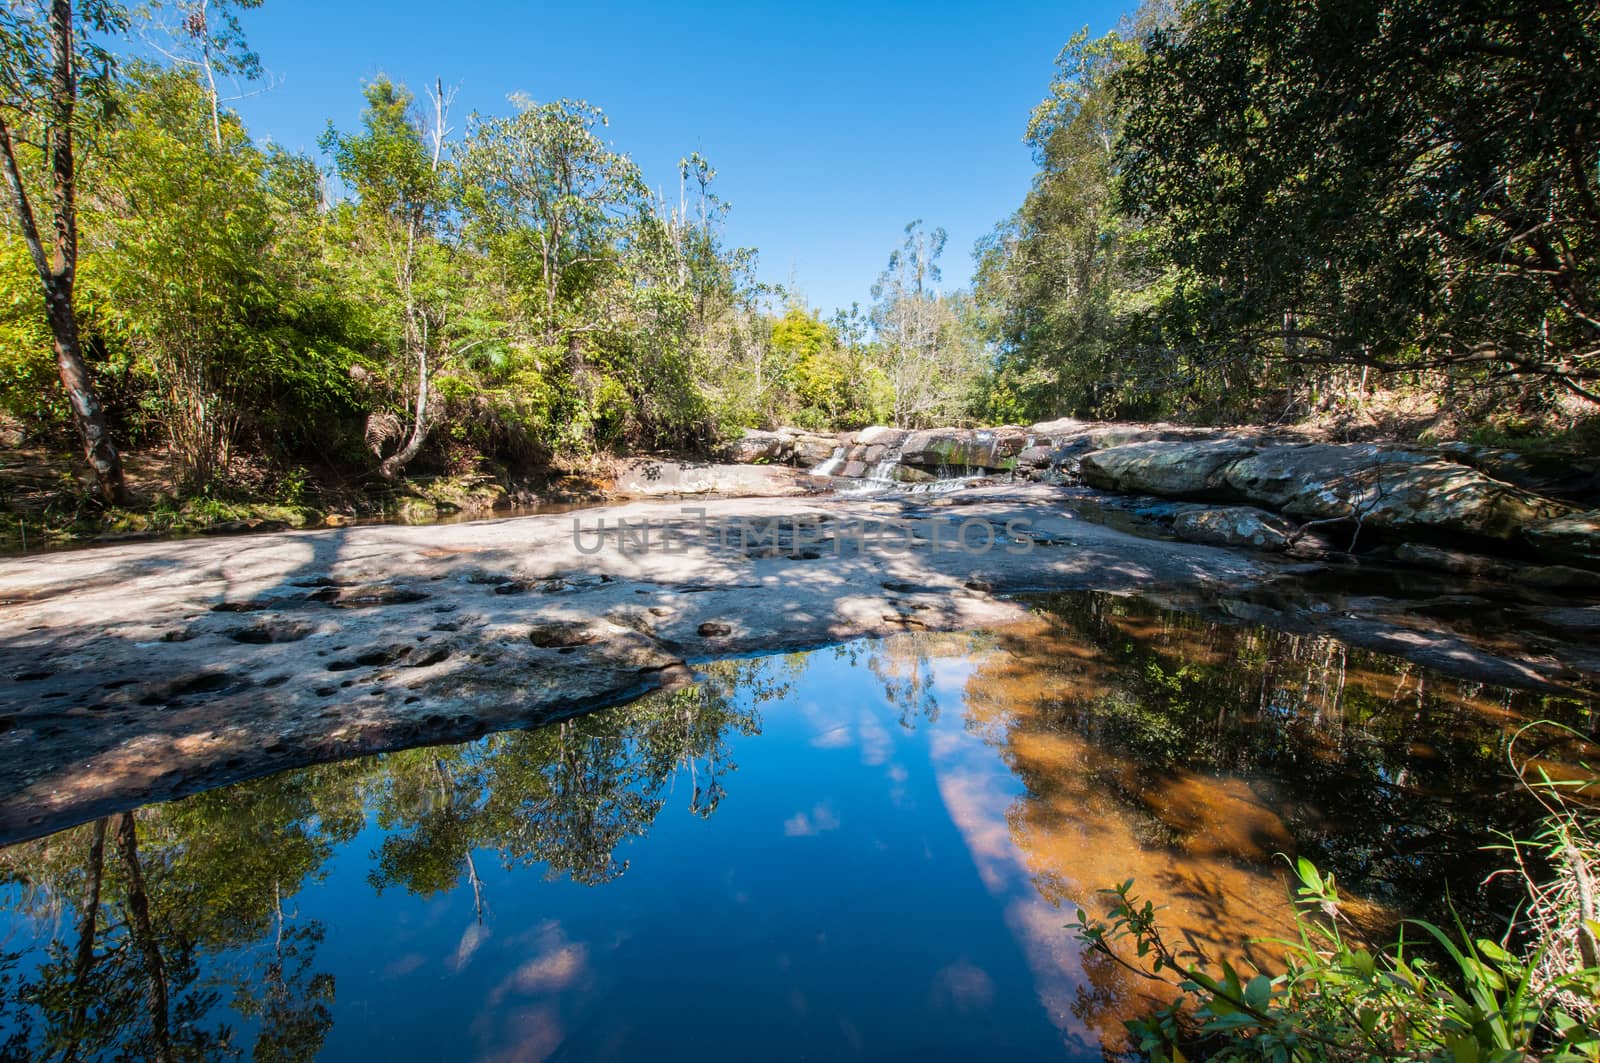 Pond of waterfall in Phu Kradueng National Park